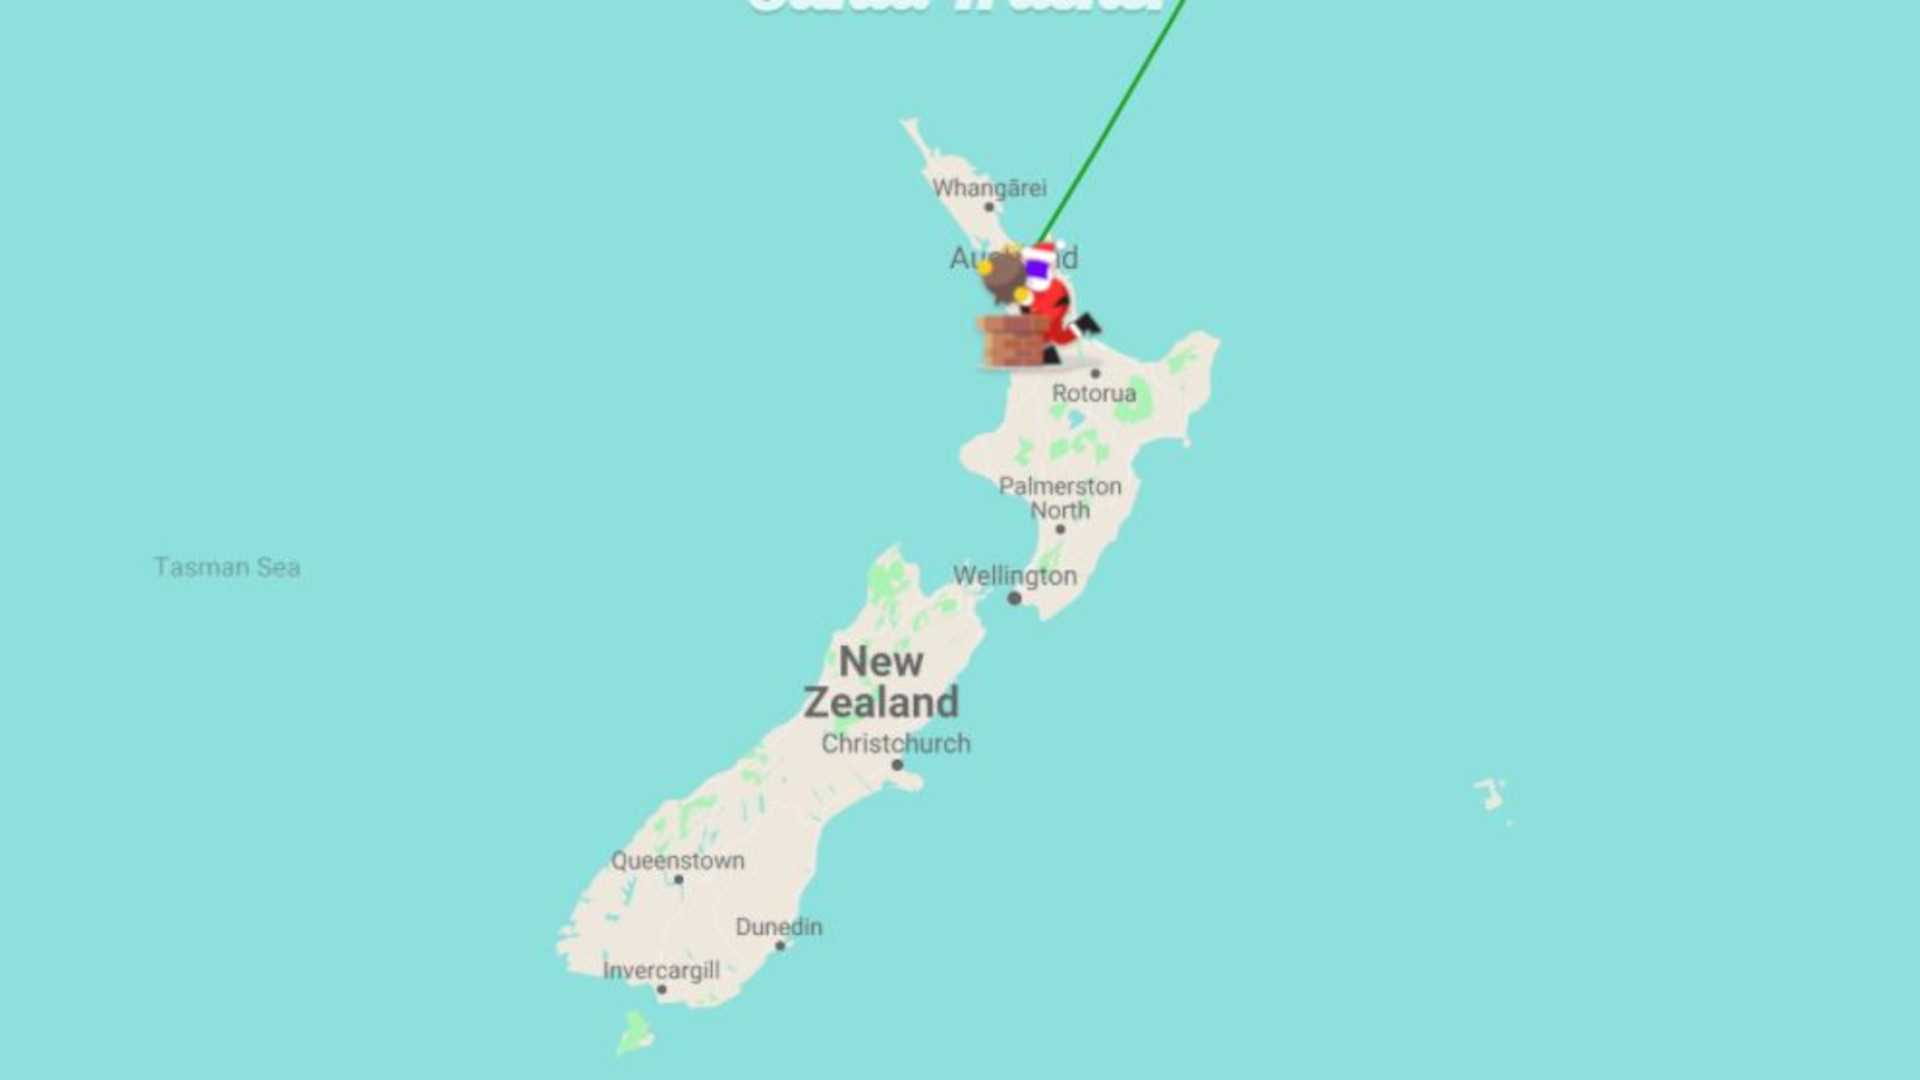 Google Santa Tracker'da Yeni Zelanda'daki Noel Baba